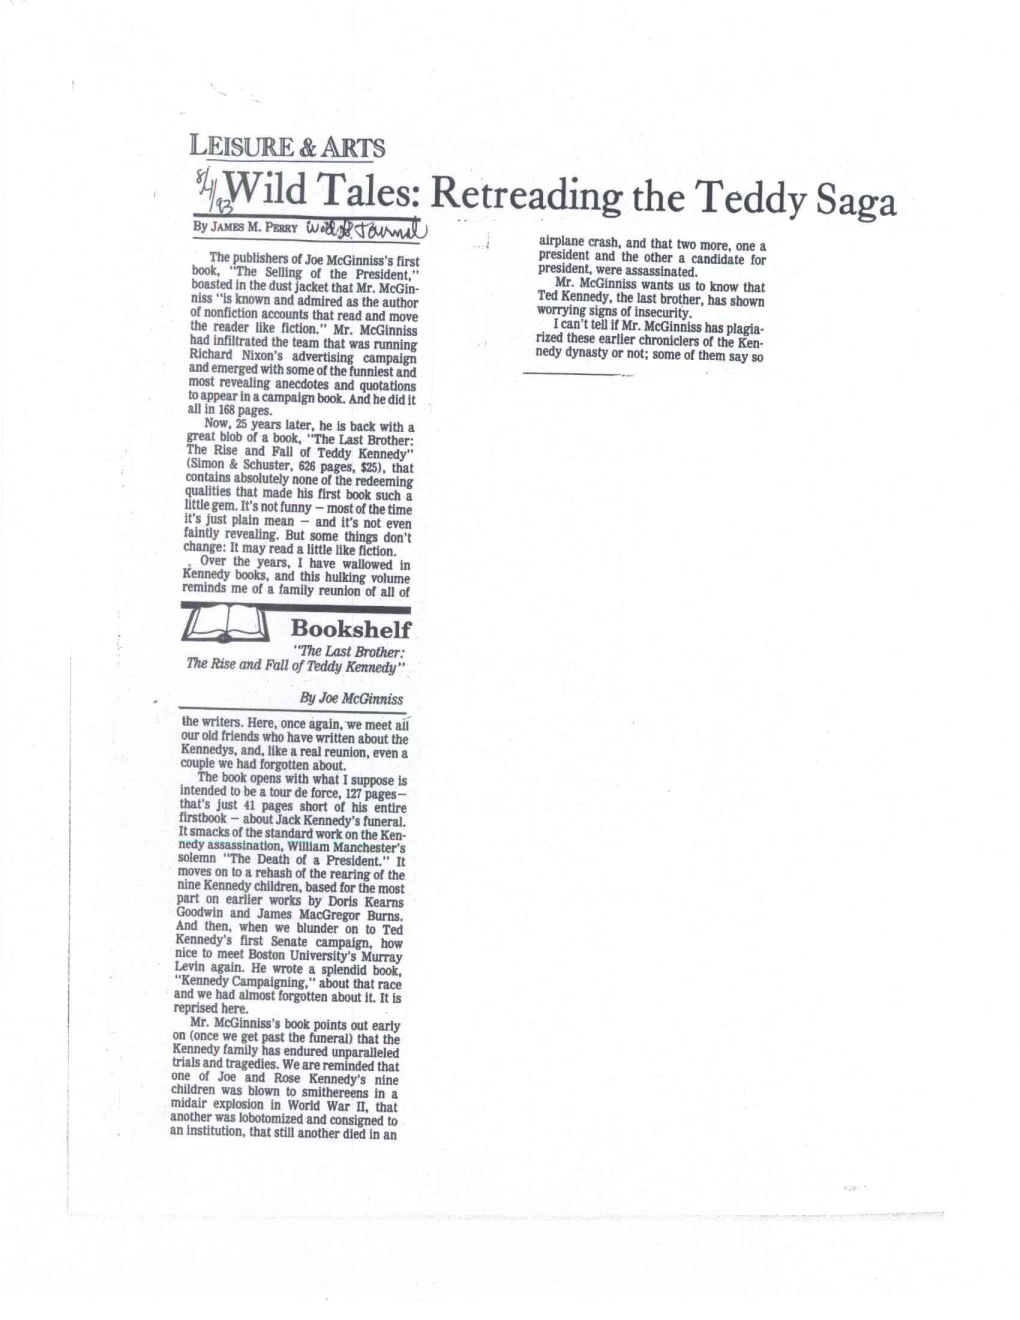 Tales: Retreading the Teddy Saga by JAMF4 M